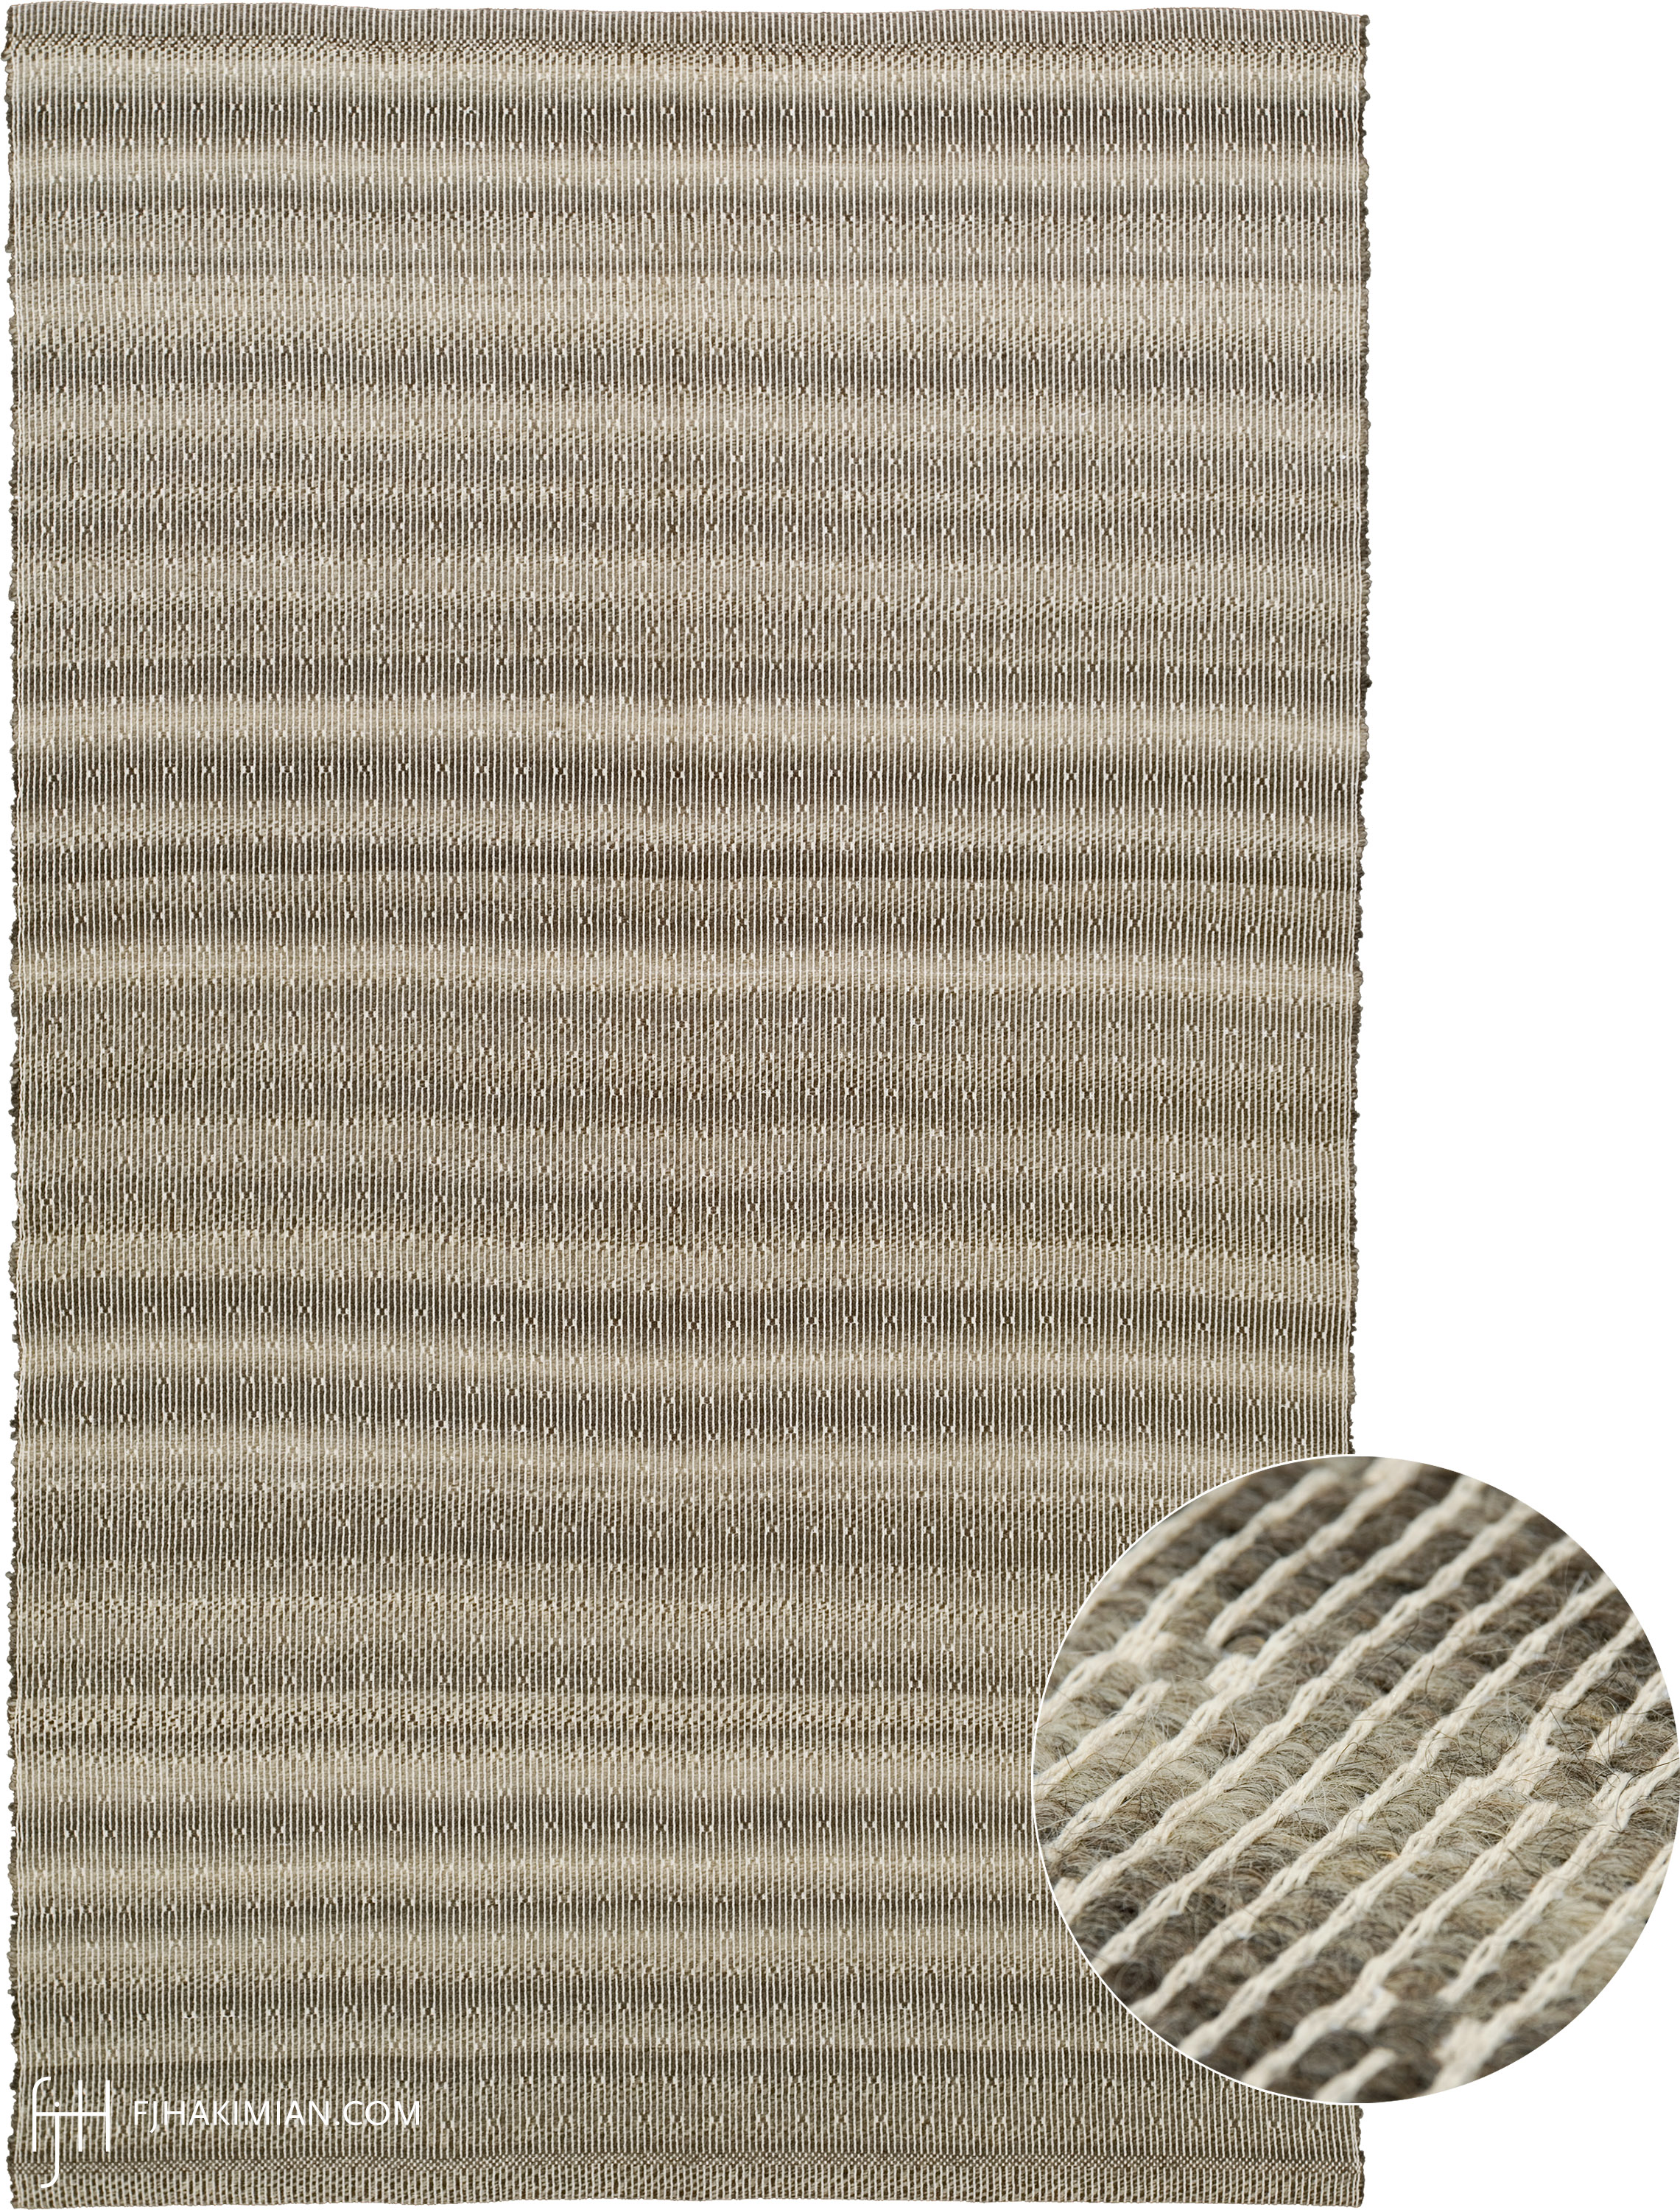 25178 | IF-210 Design | Custom Sardinian Carpet | FJ Hakimian | Carpet Gallery in NYC